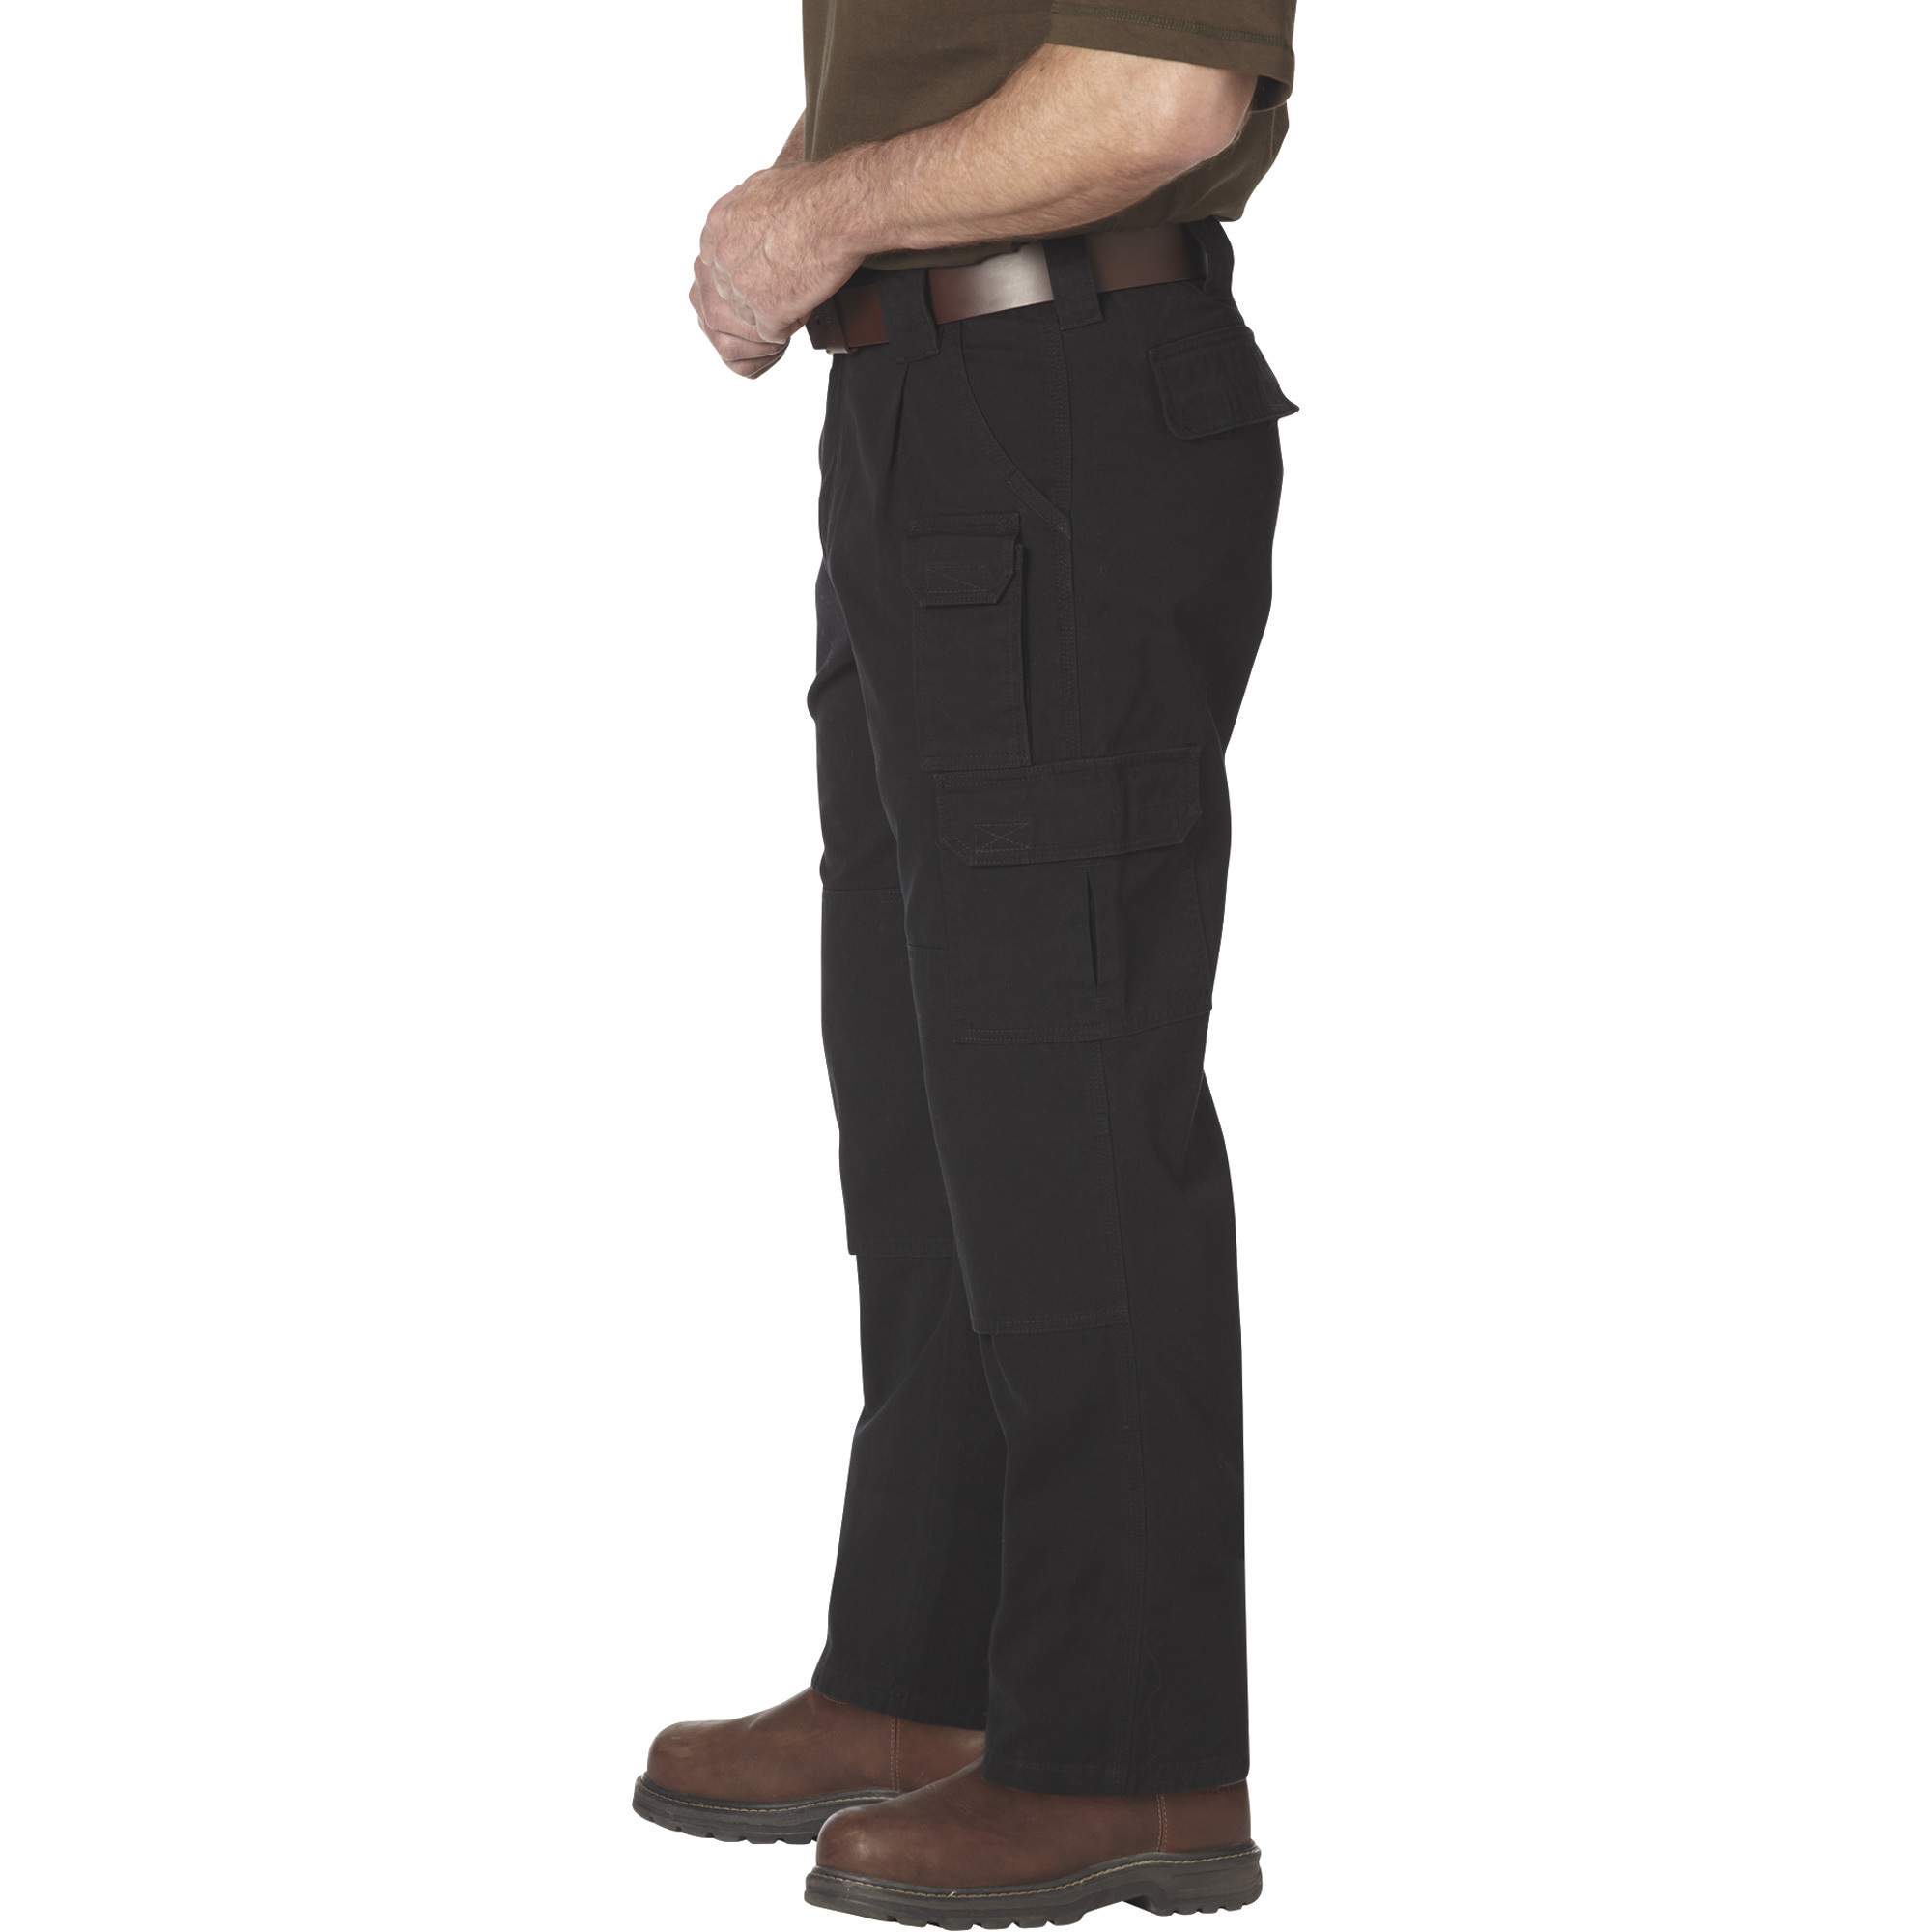 Gravel Gear Men's 7-Pocket Tactical Pants with Teflon - Black, 30Inch Waist x 32Inch Inseam